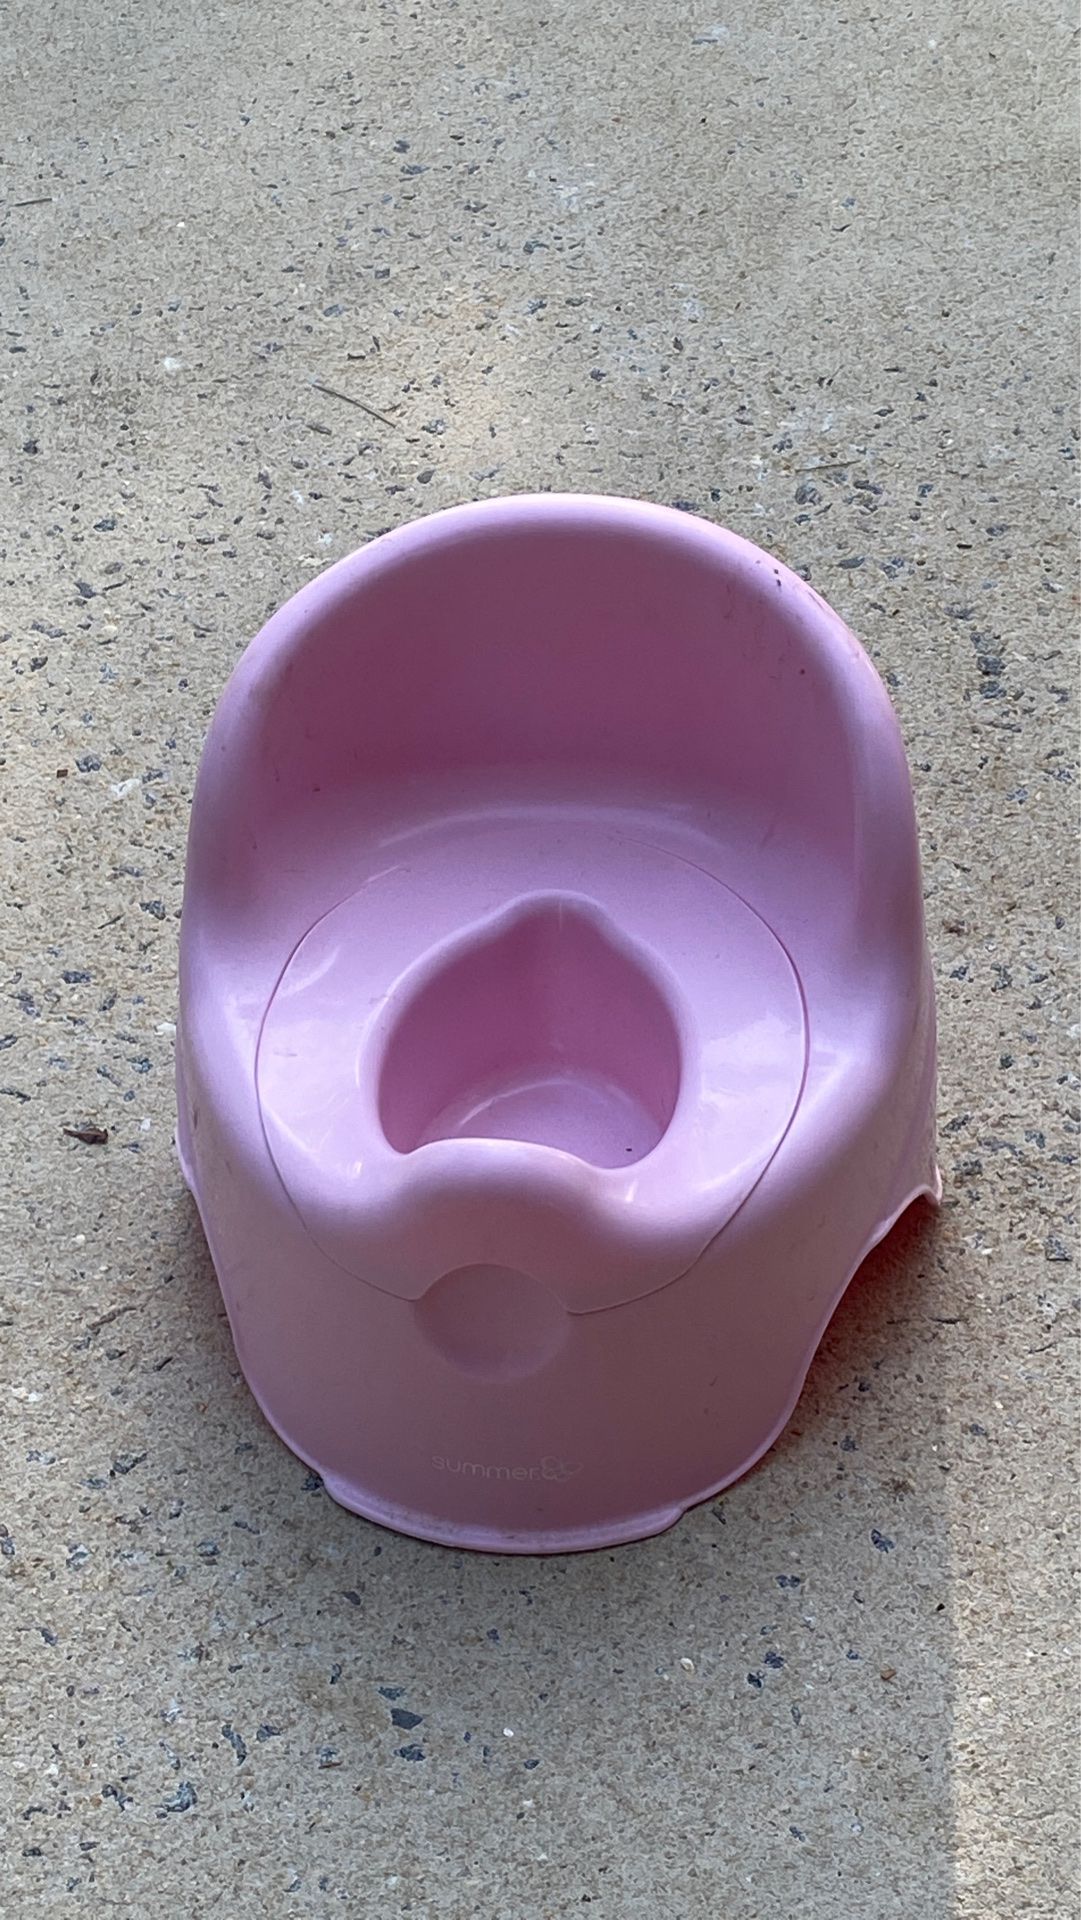 Pink potty training potty toilet